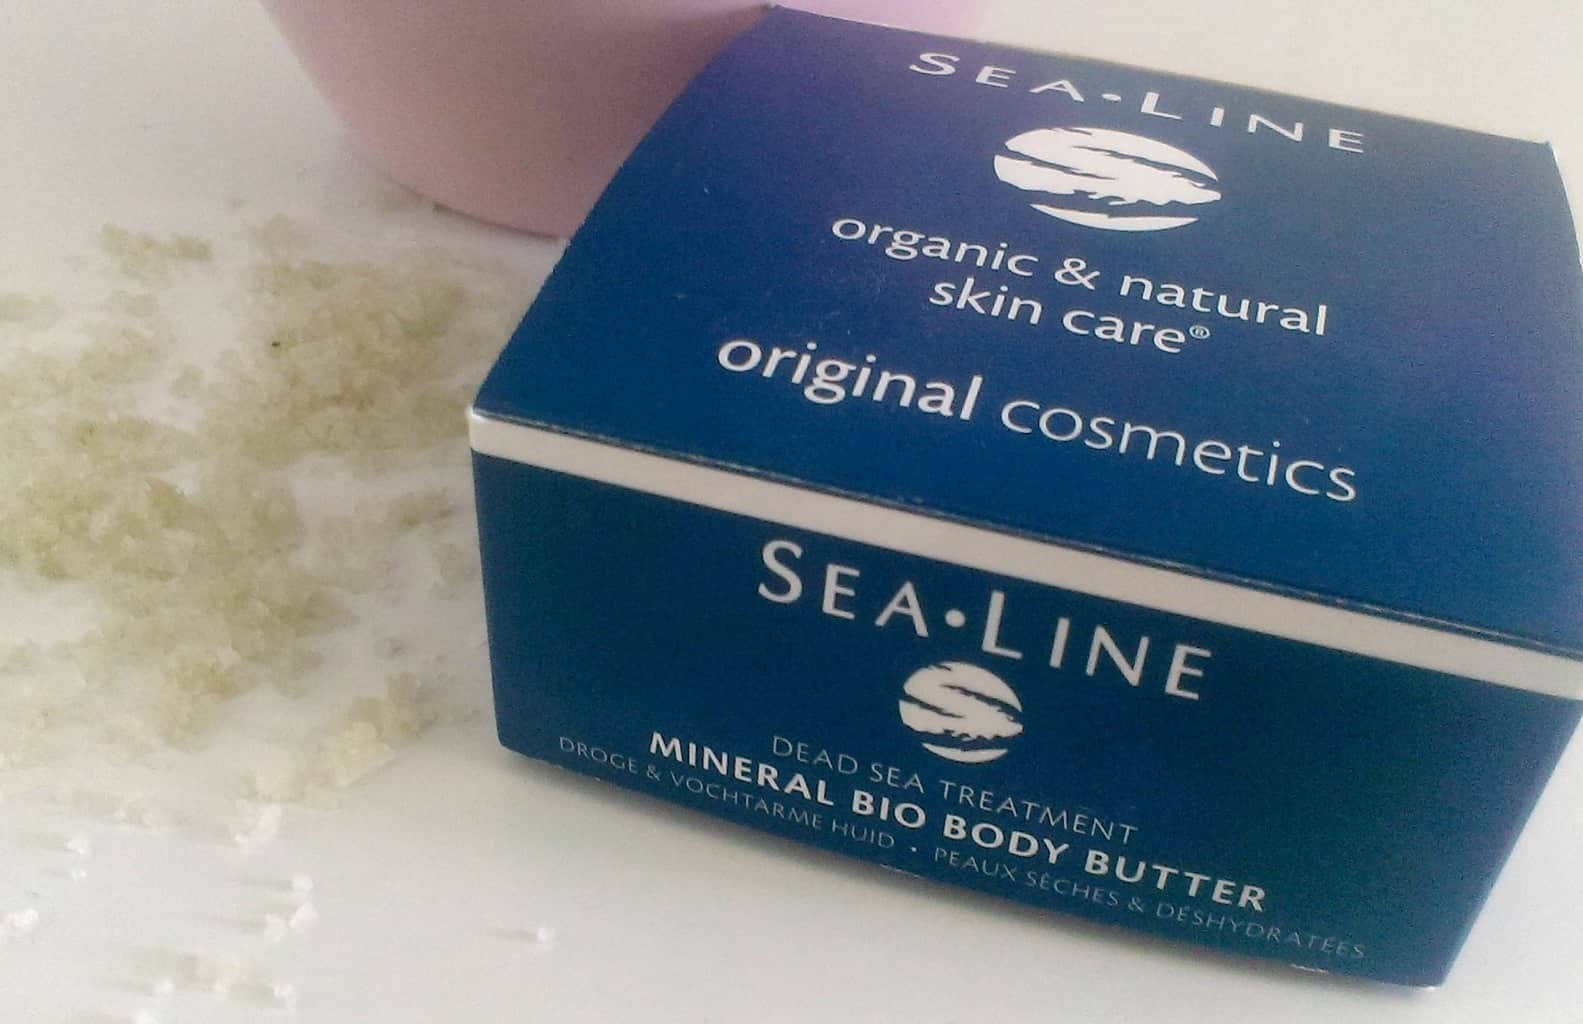 SeaLine Mineral Bio Body Butter